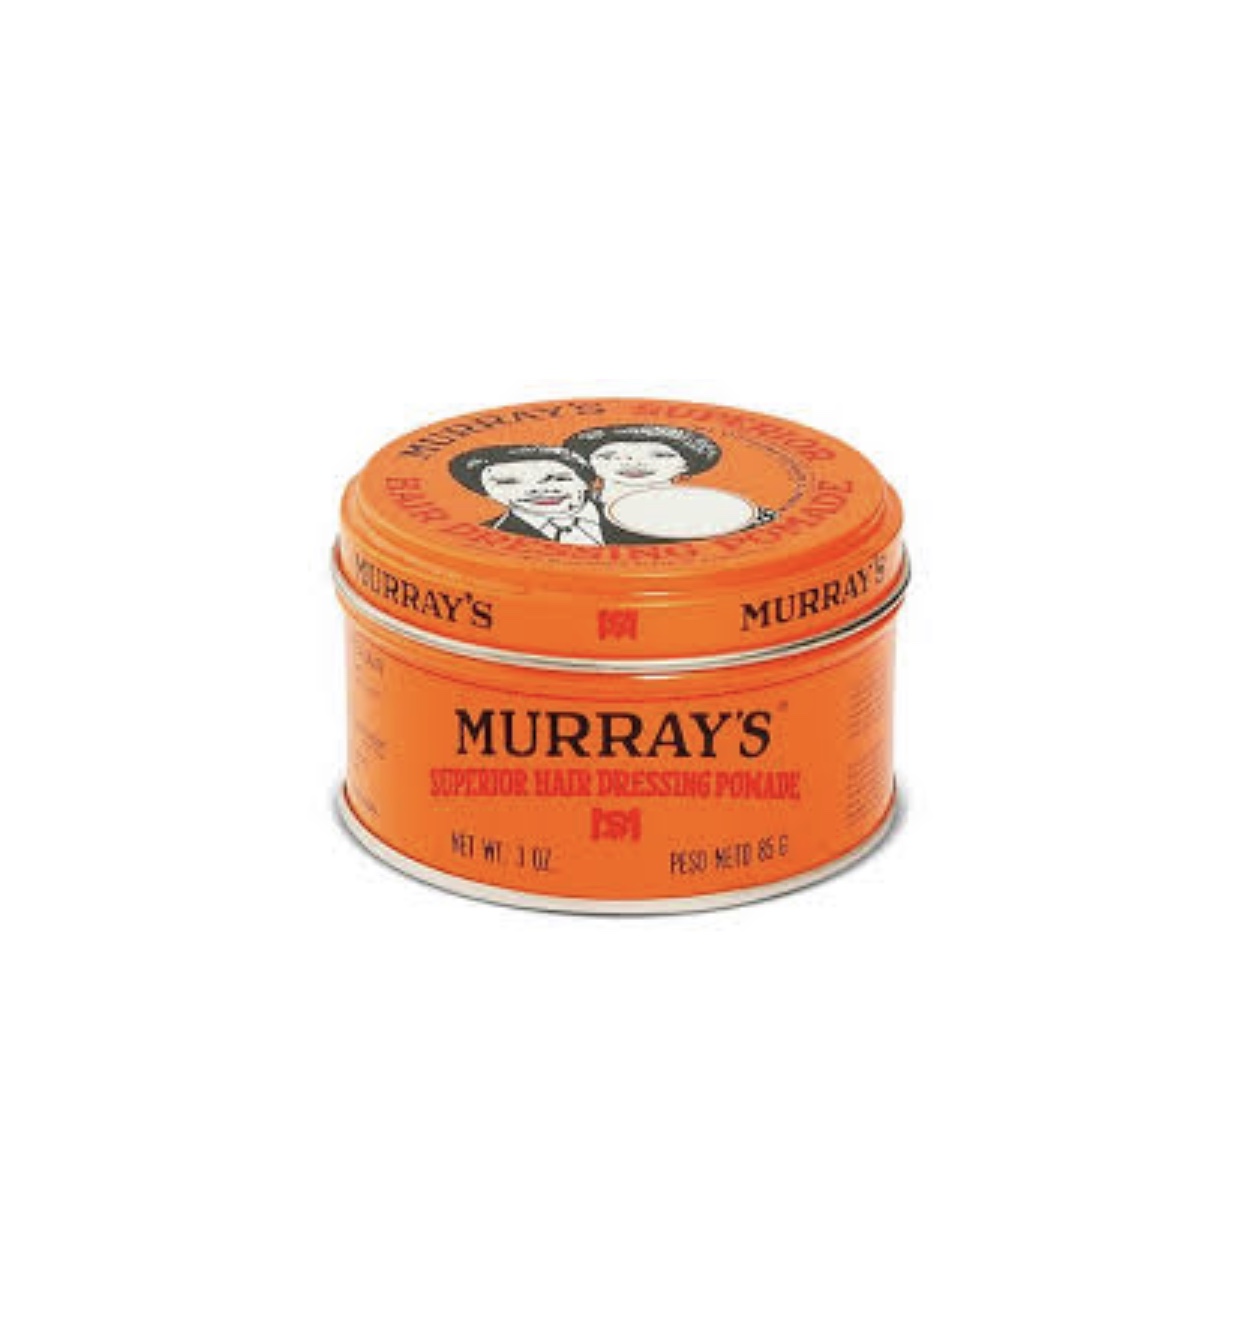 Murray's Murray's Superior Hair Dressing Pomade